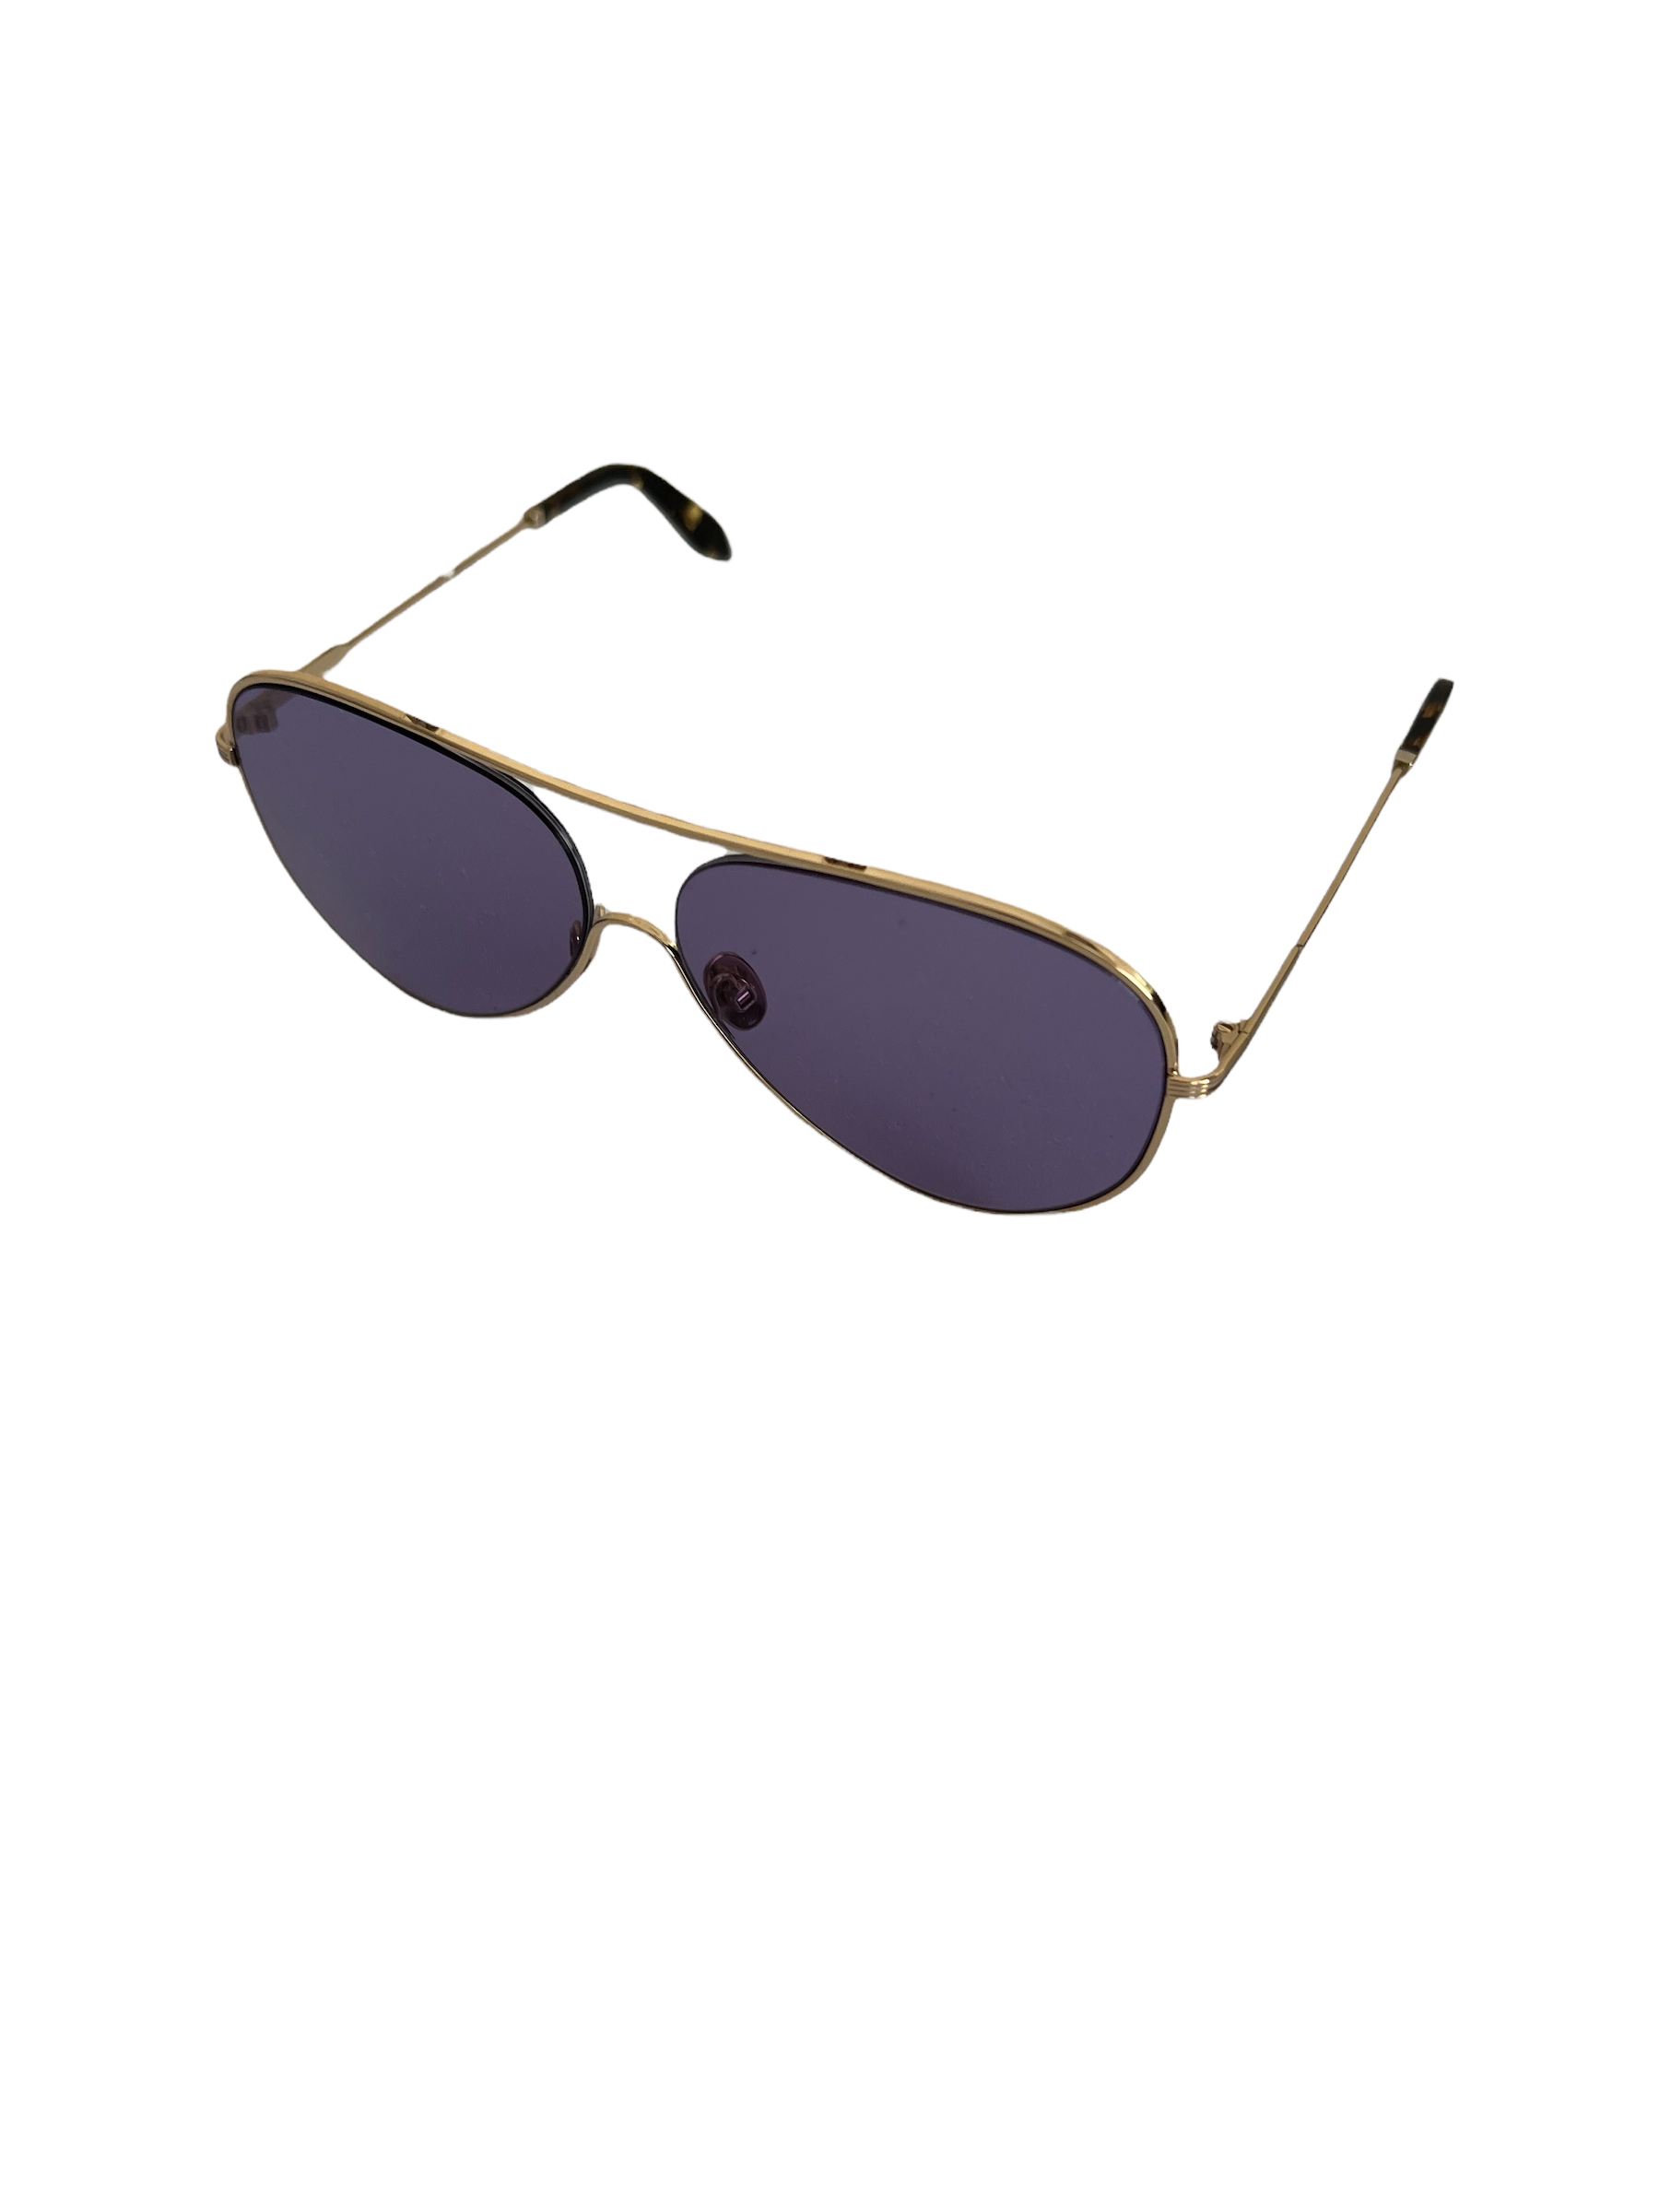 Victoria Beckham Pilot Sunglasses purple